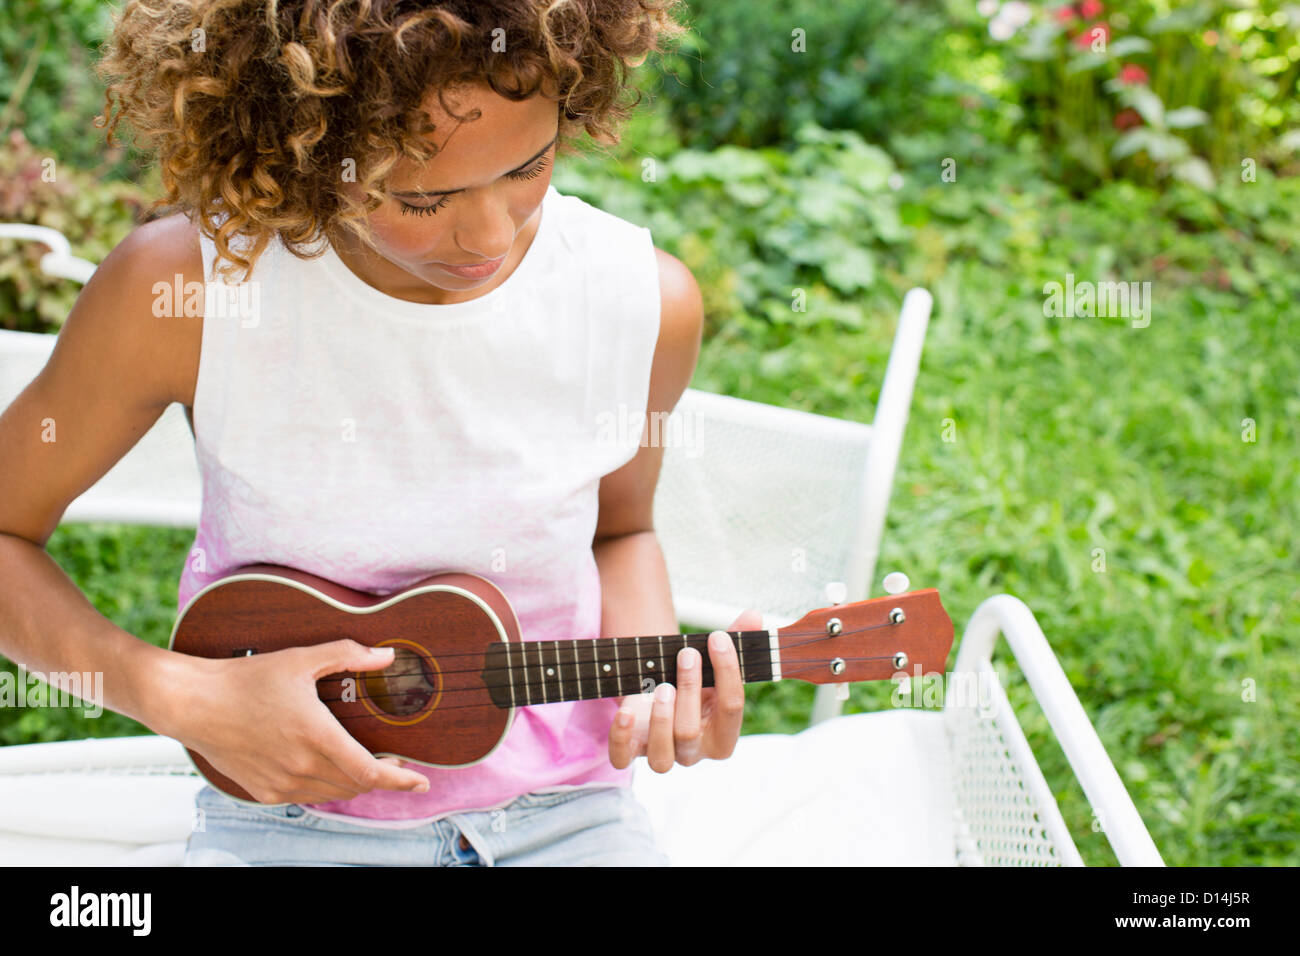 Woman playing ukulele in backyard Stock Photo